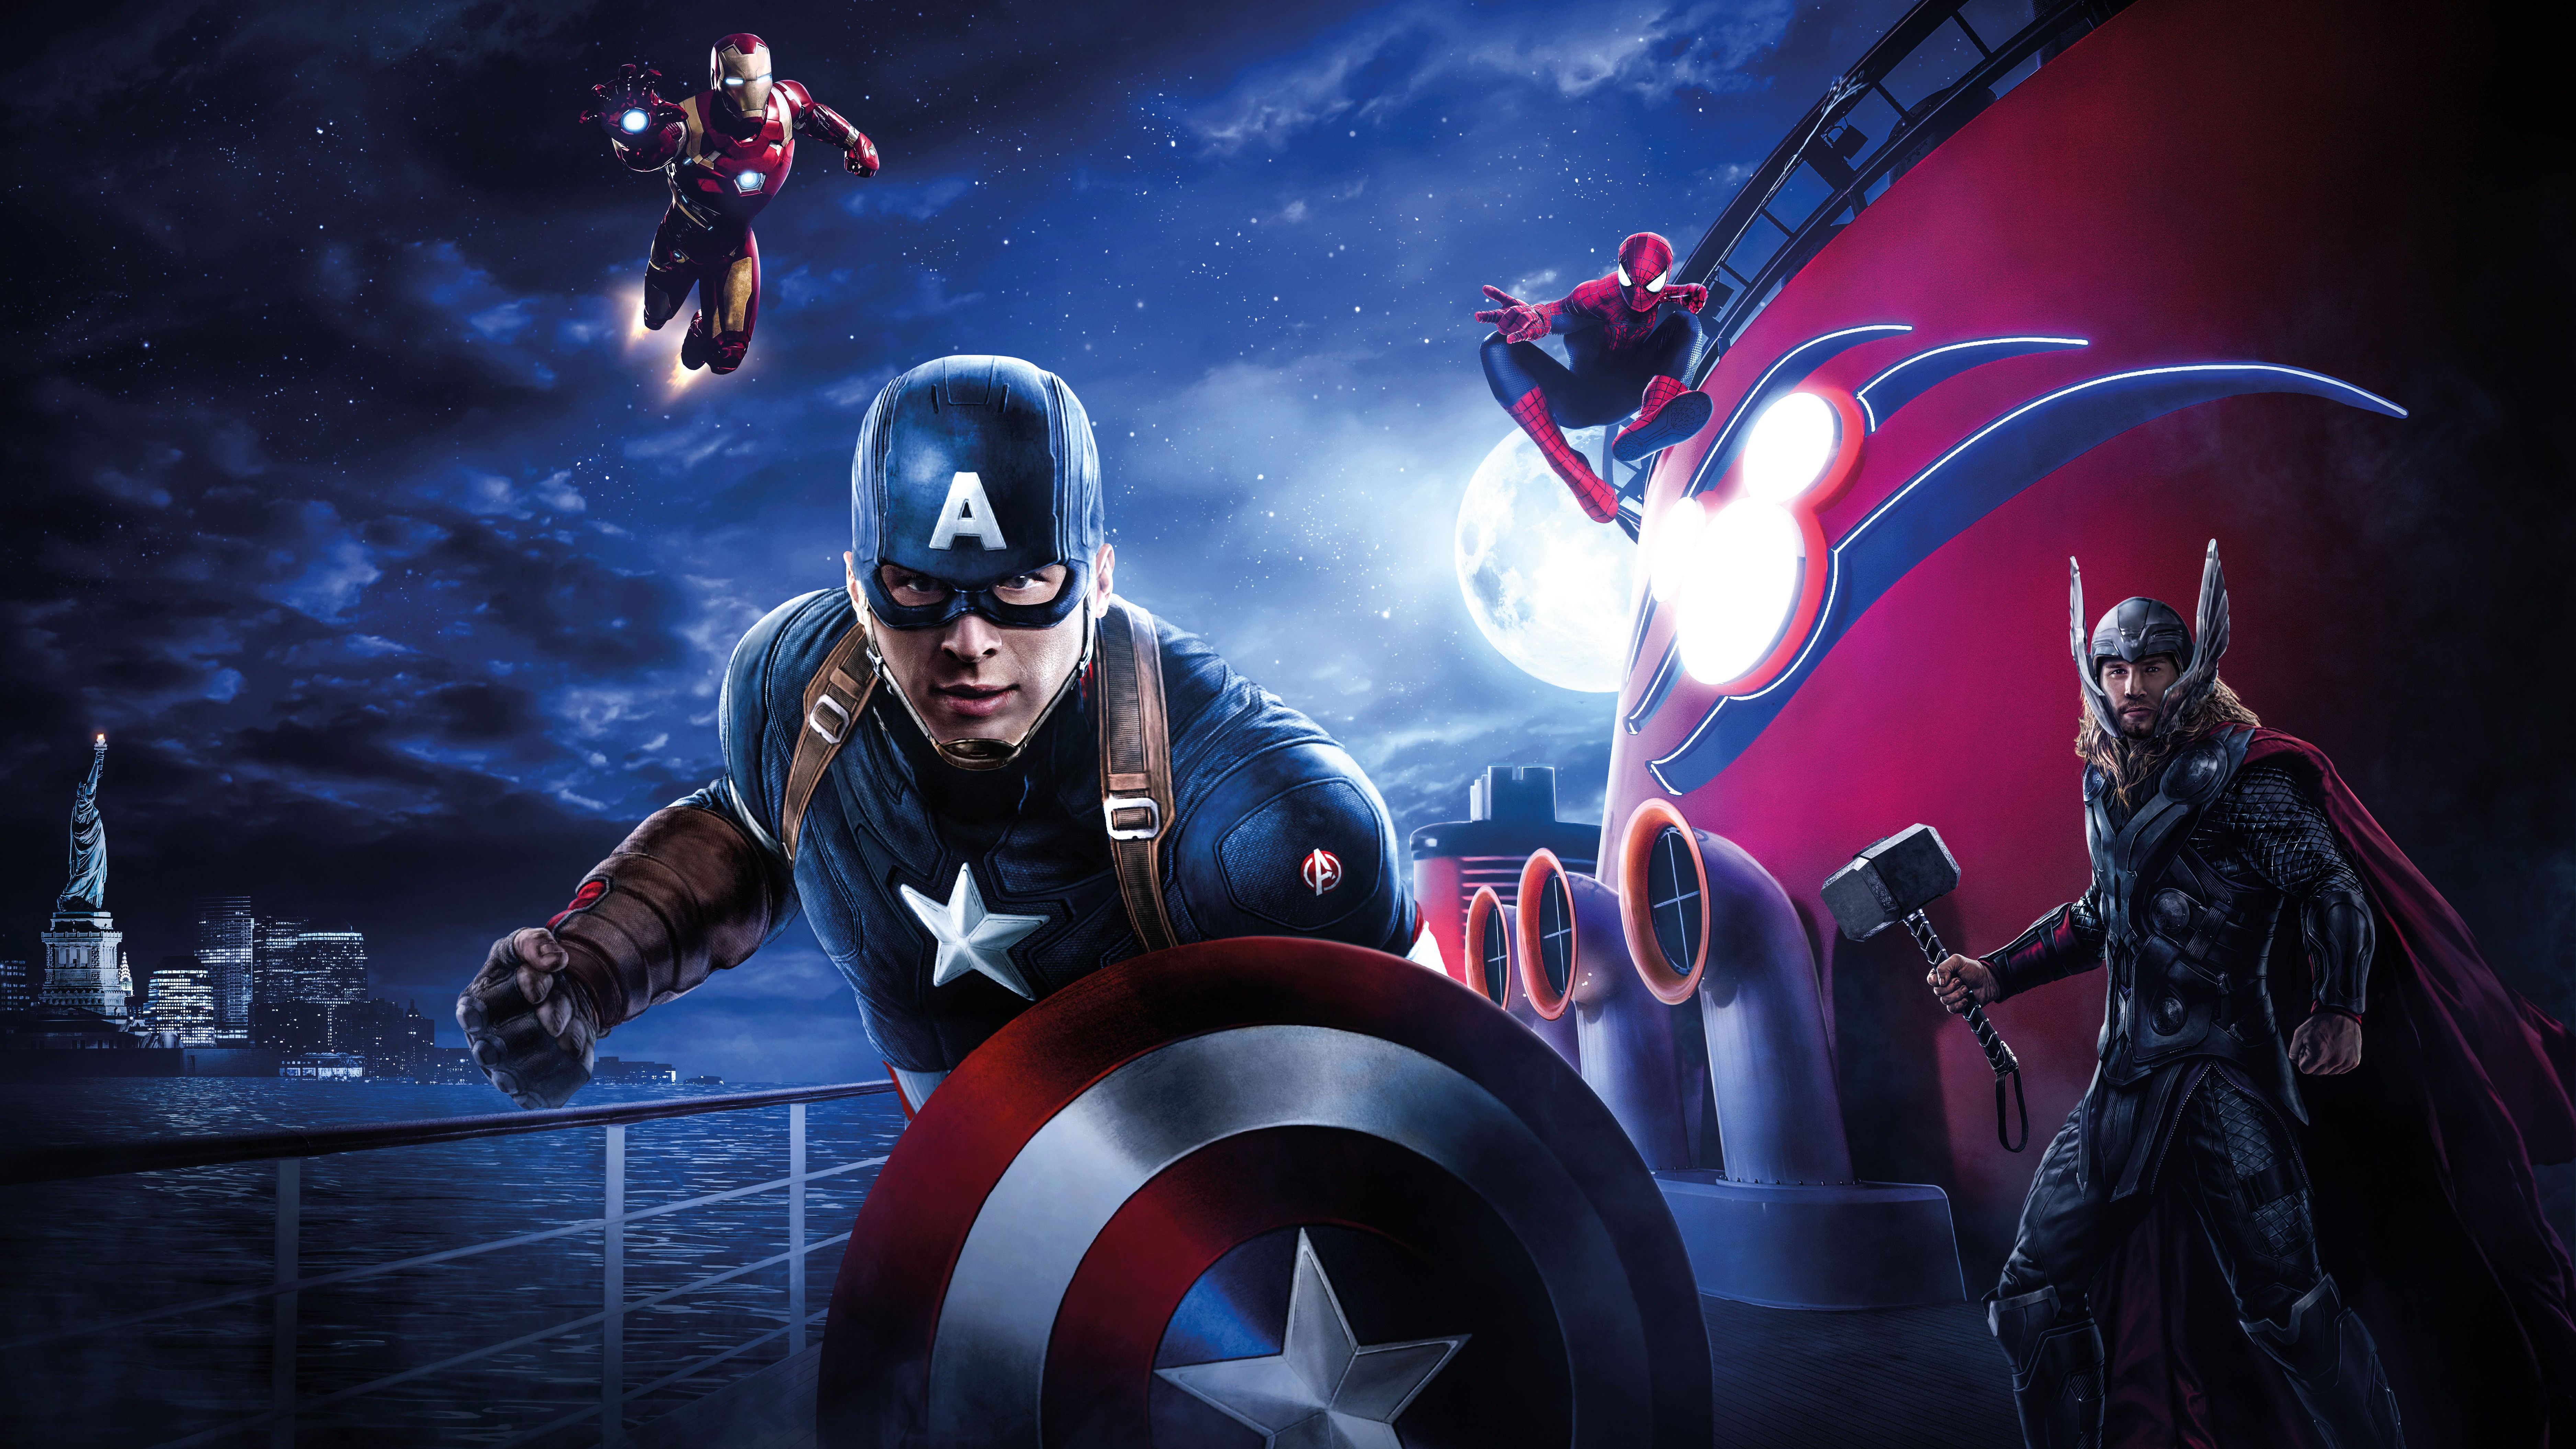 Captain America Thor Iron Man Spiderman Disneyland Paris Marvel Disney Cruise, HD Superheroes, 4k Wallpaper, Image, Background, Photo and Picture